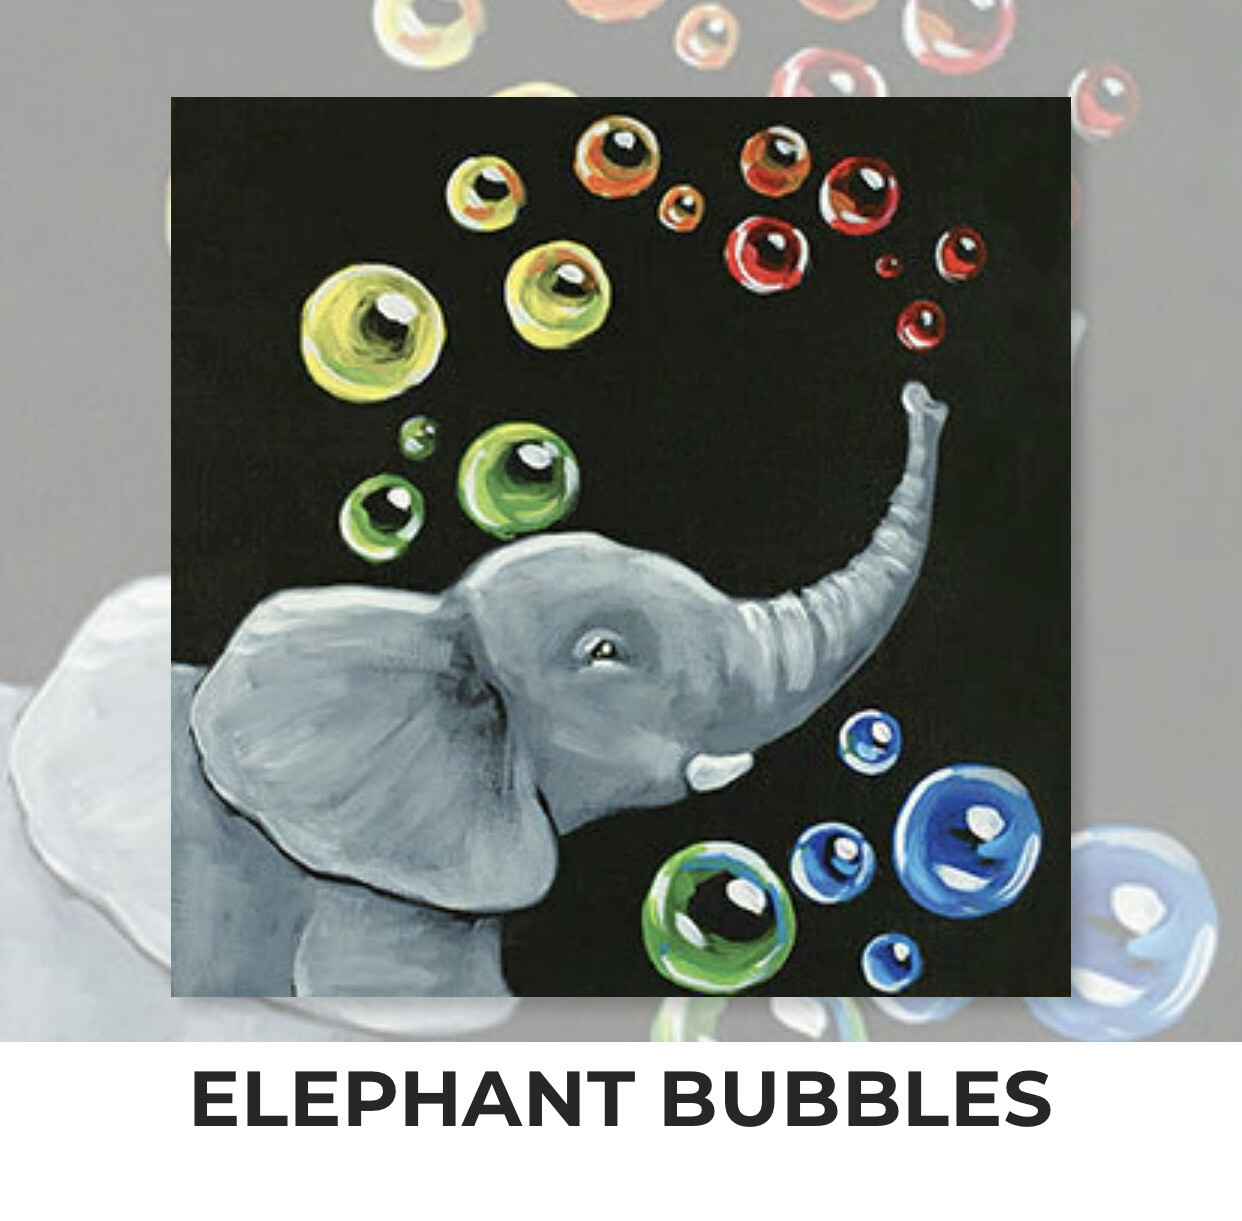 Elephant Bubbles ADULT OR TWEEN Acrylic Paint On Canvas DIY Art Kit - 3 Week Special Order